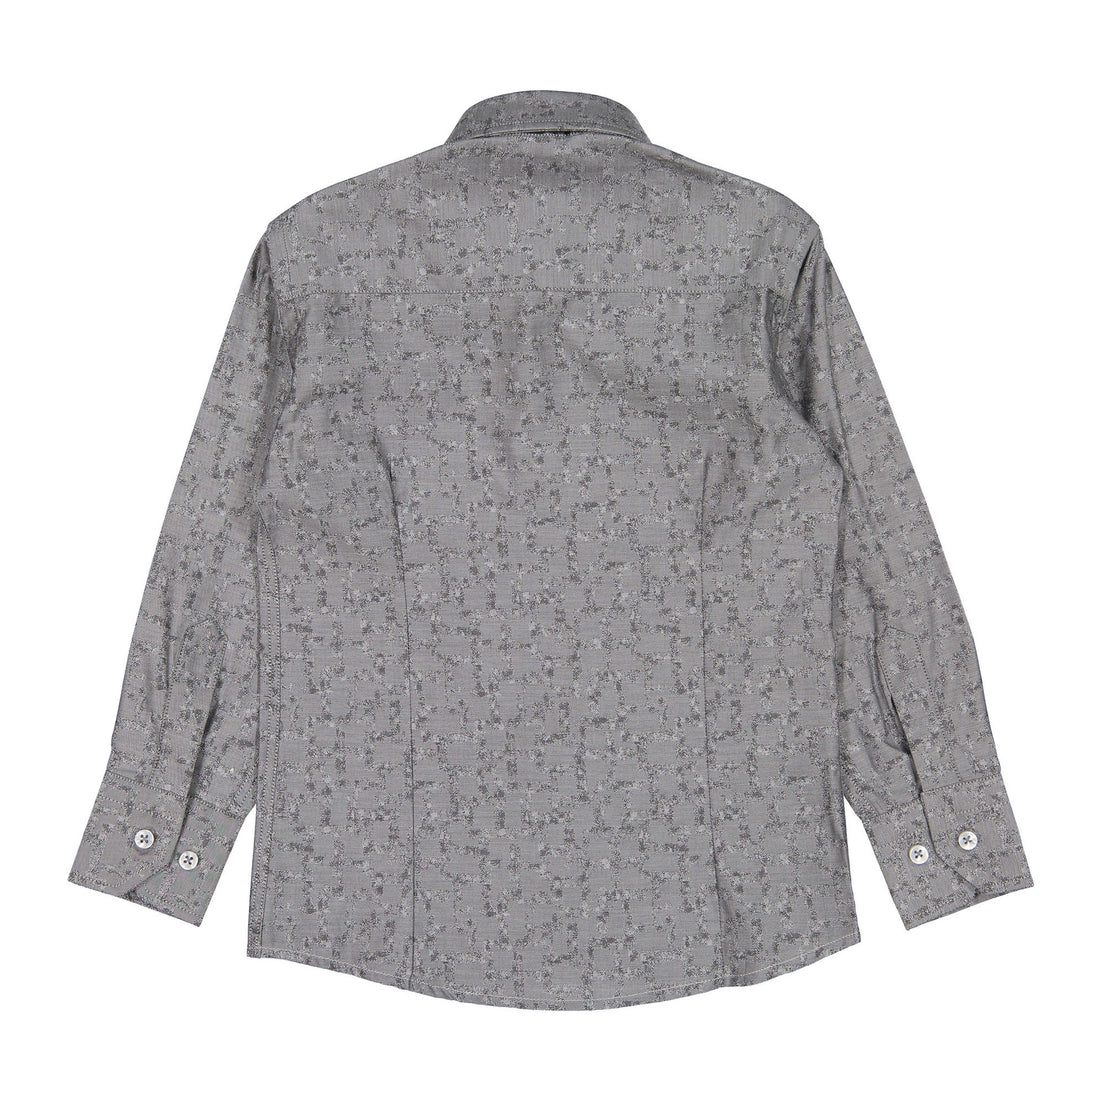 Manuelle Frank Charcoal Grey Printed Shirt